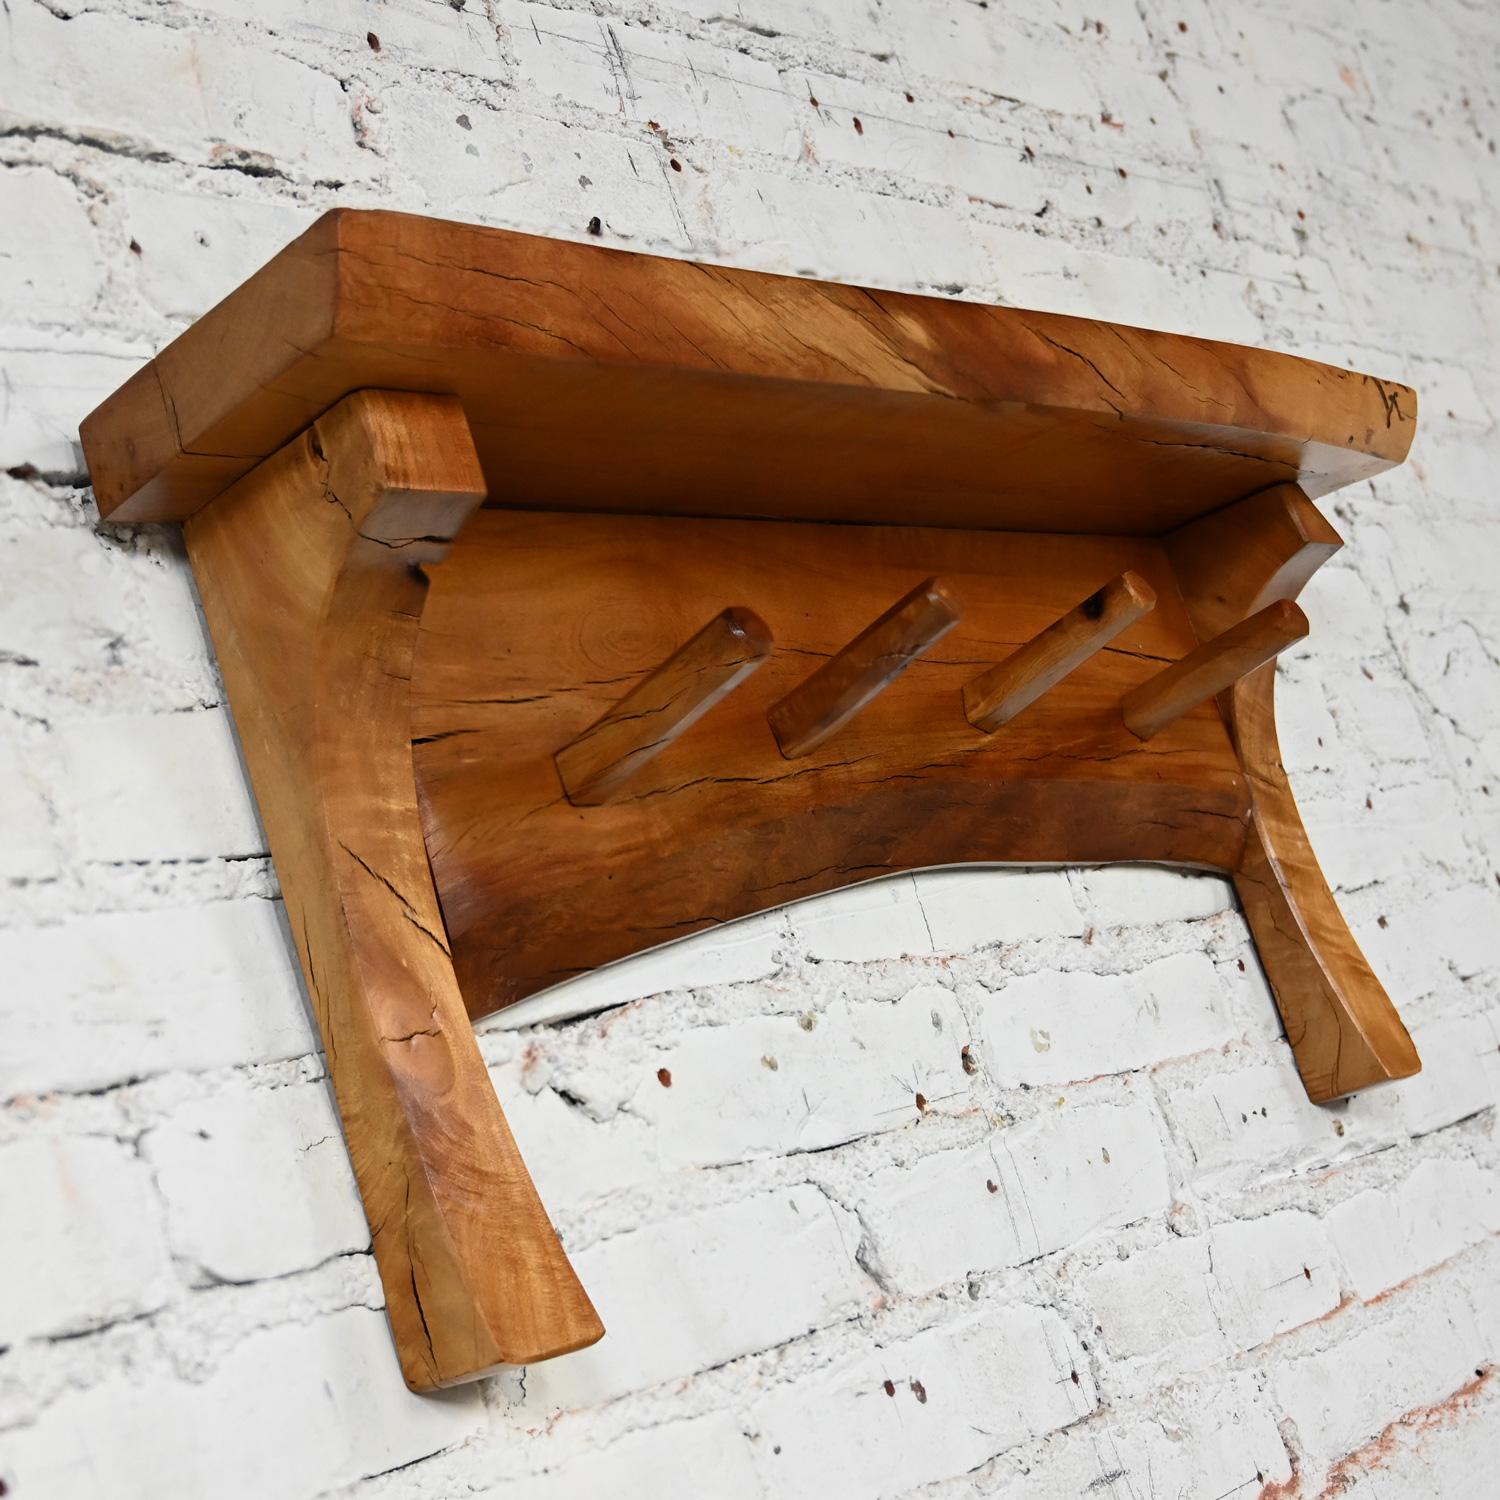 20th C Folk Art Organic Modern Rustic Natural Edge Wood Slab Wall Shelf w/ Pegs For Sale 2